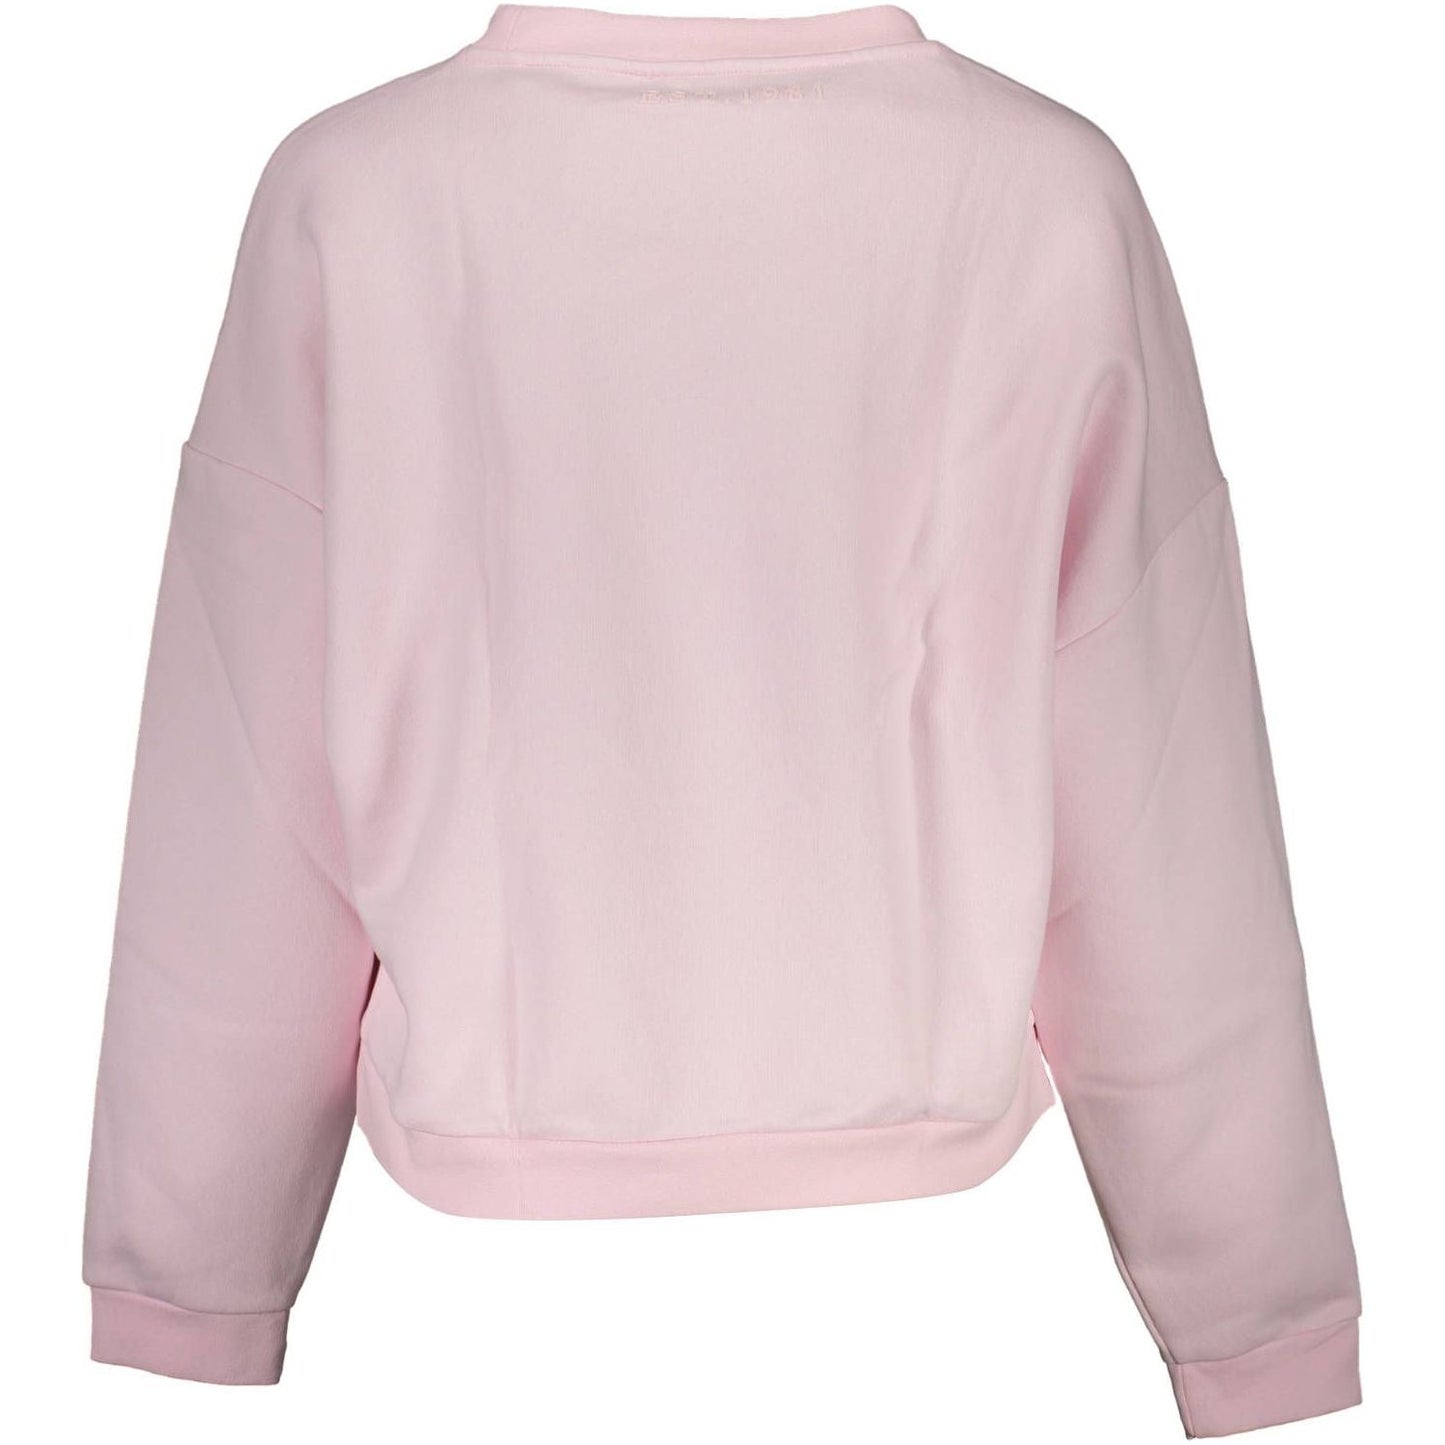 Guess JeansChic Pink Printed Organic Cotton SweaterMcRichard Designer Brands£99.00